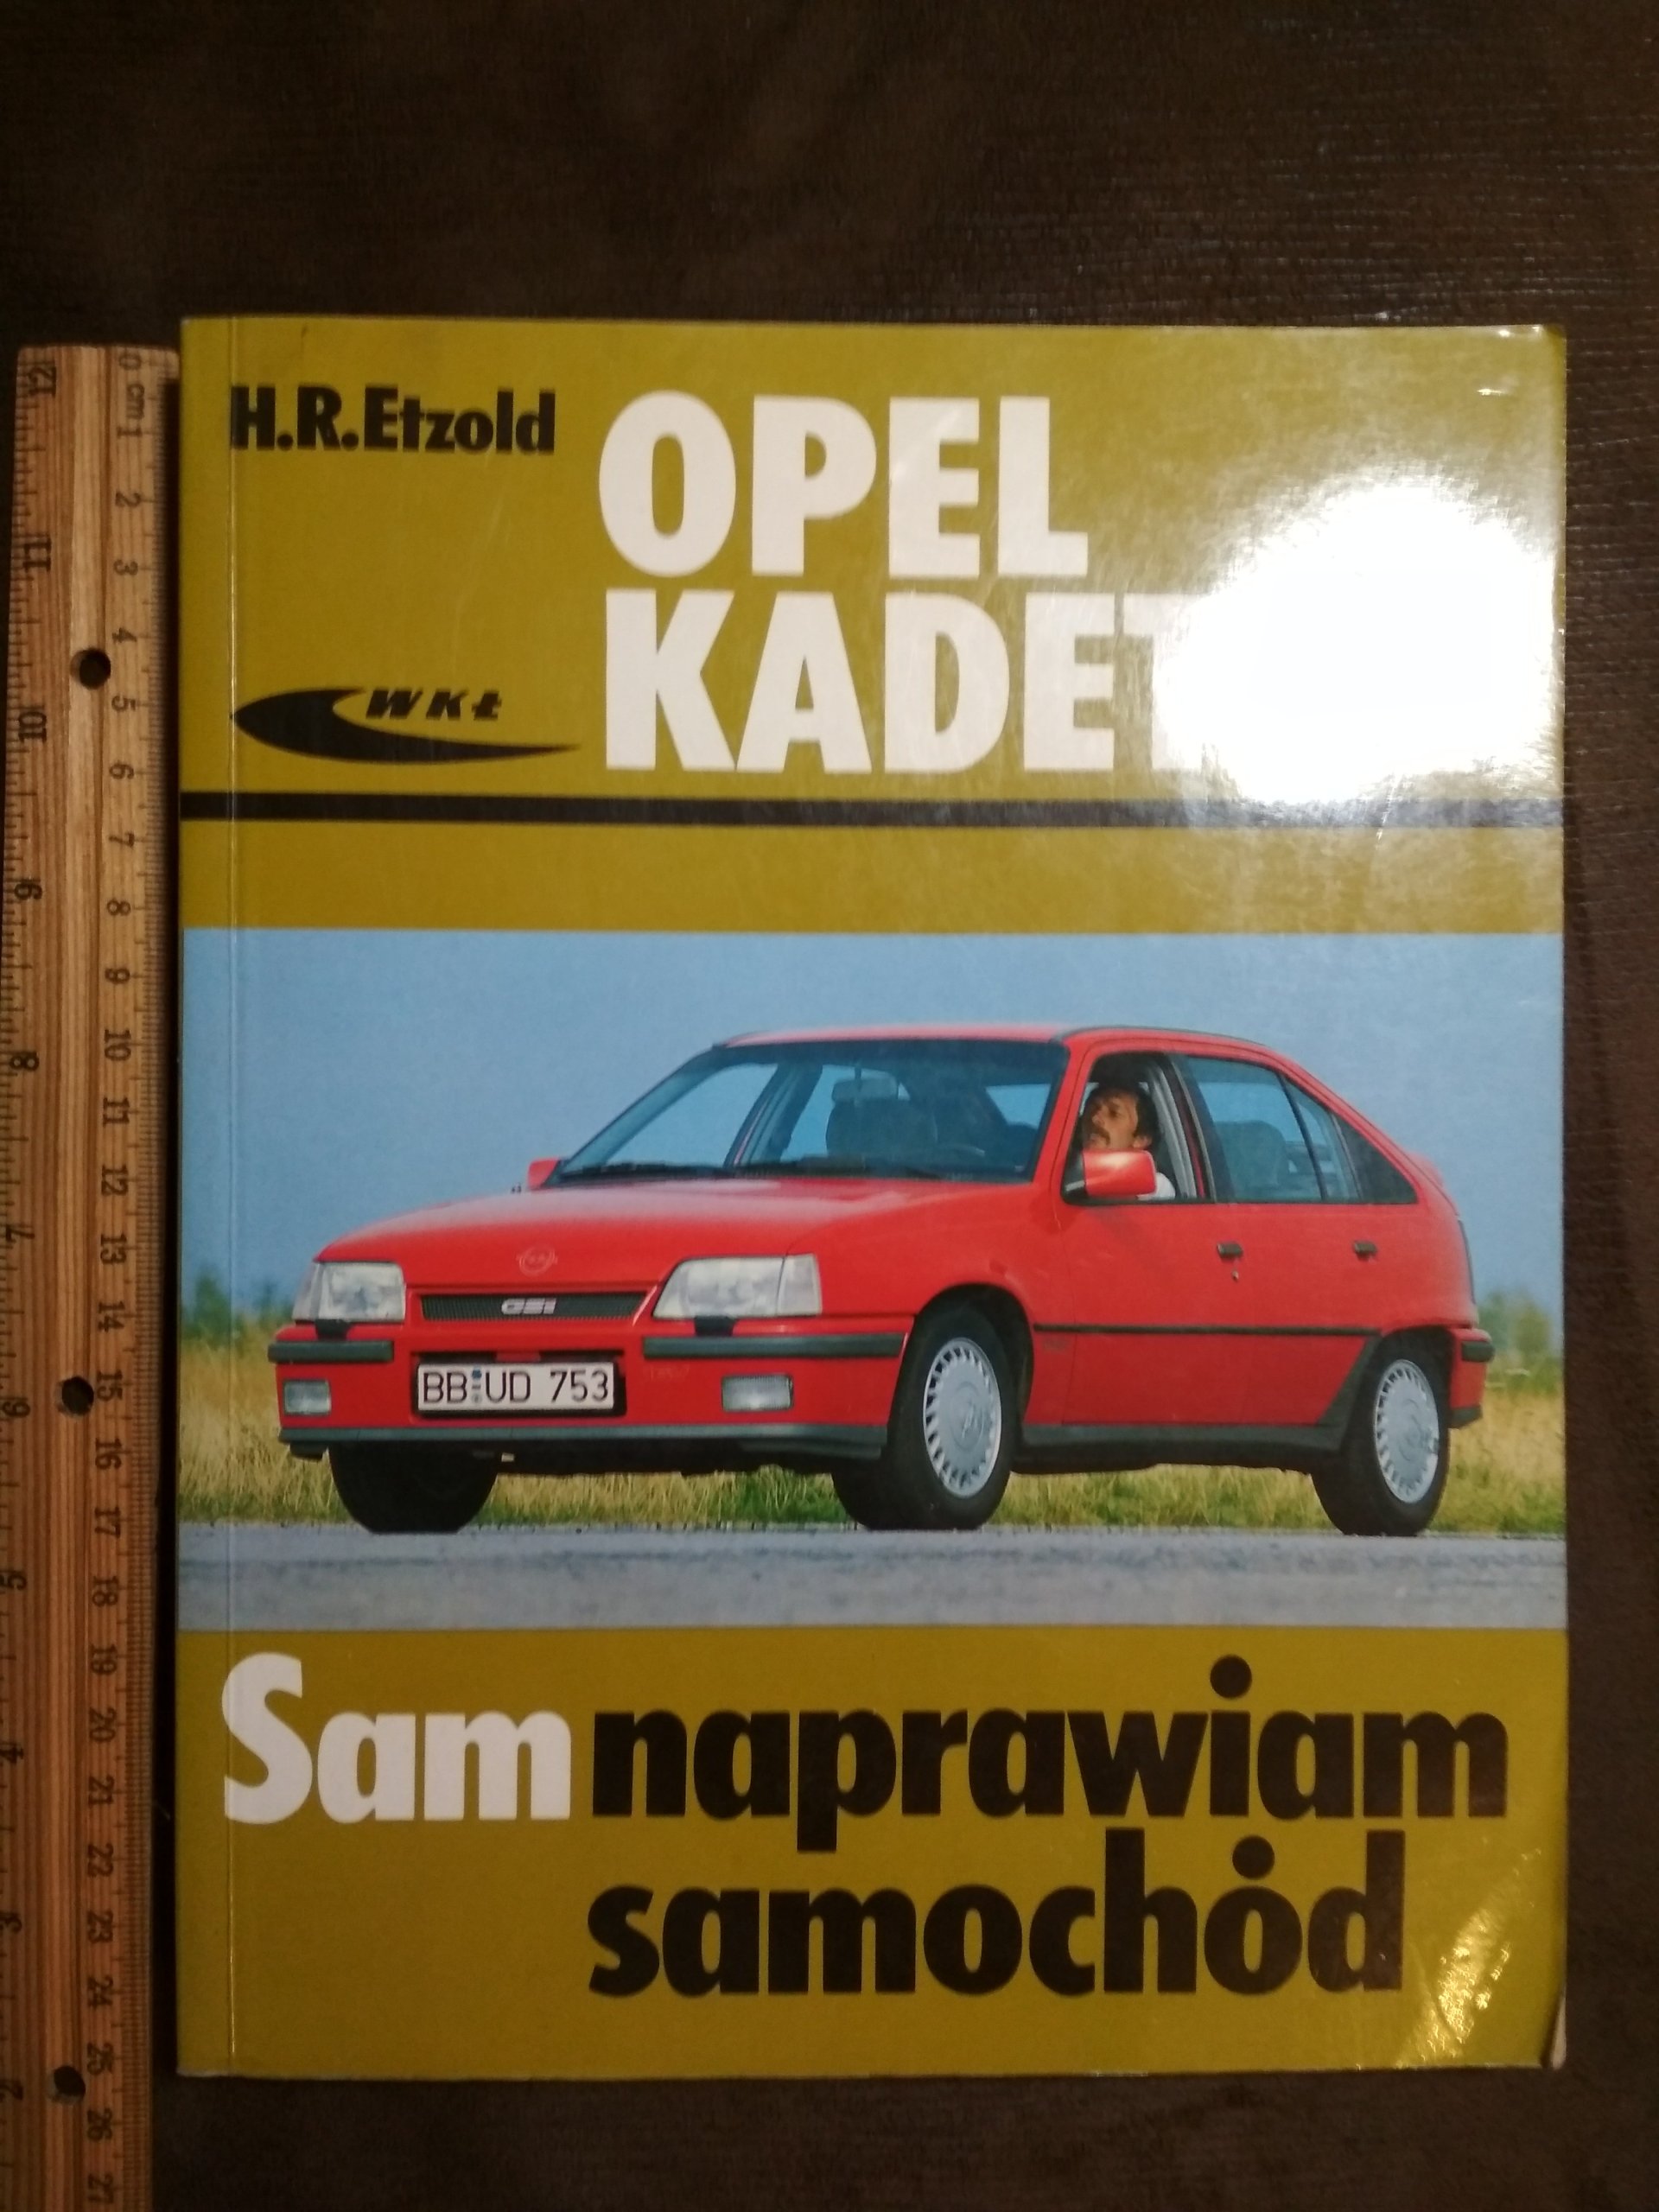 Opel Kadette Sam naprawiam samochód